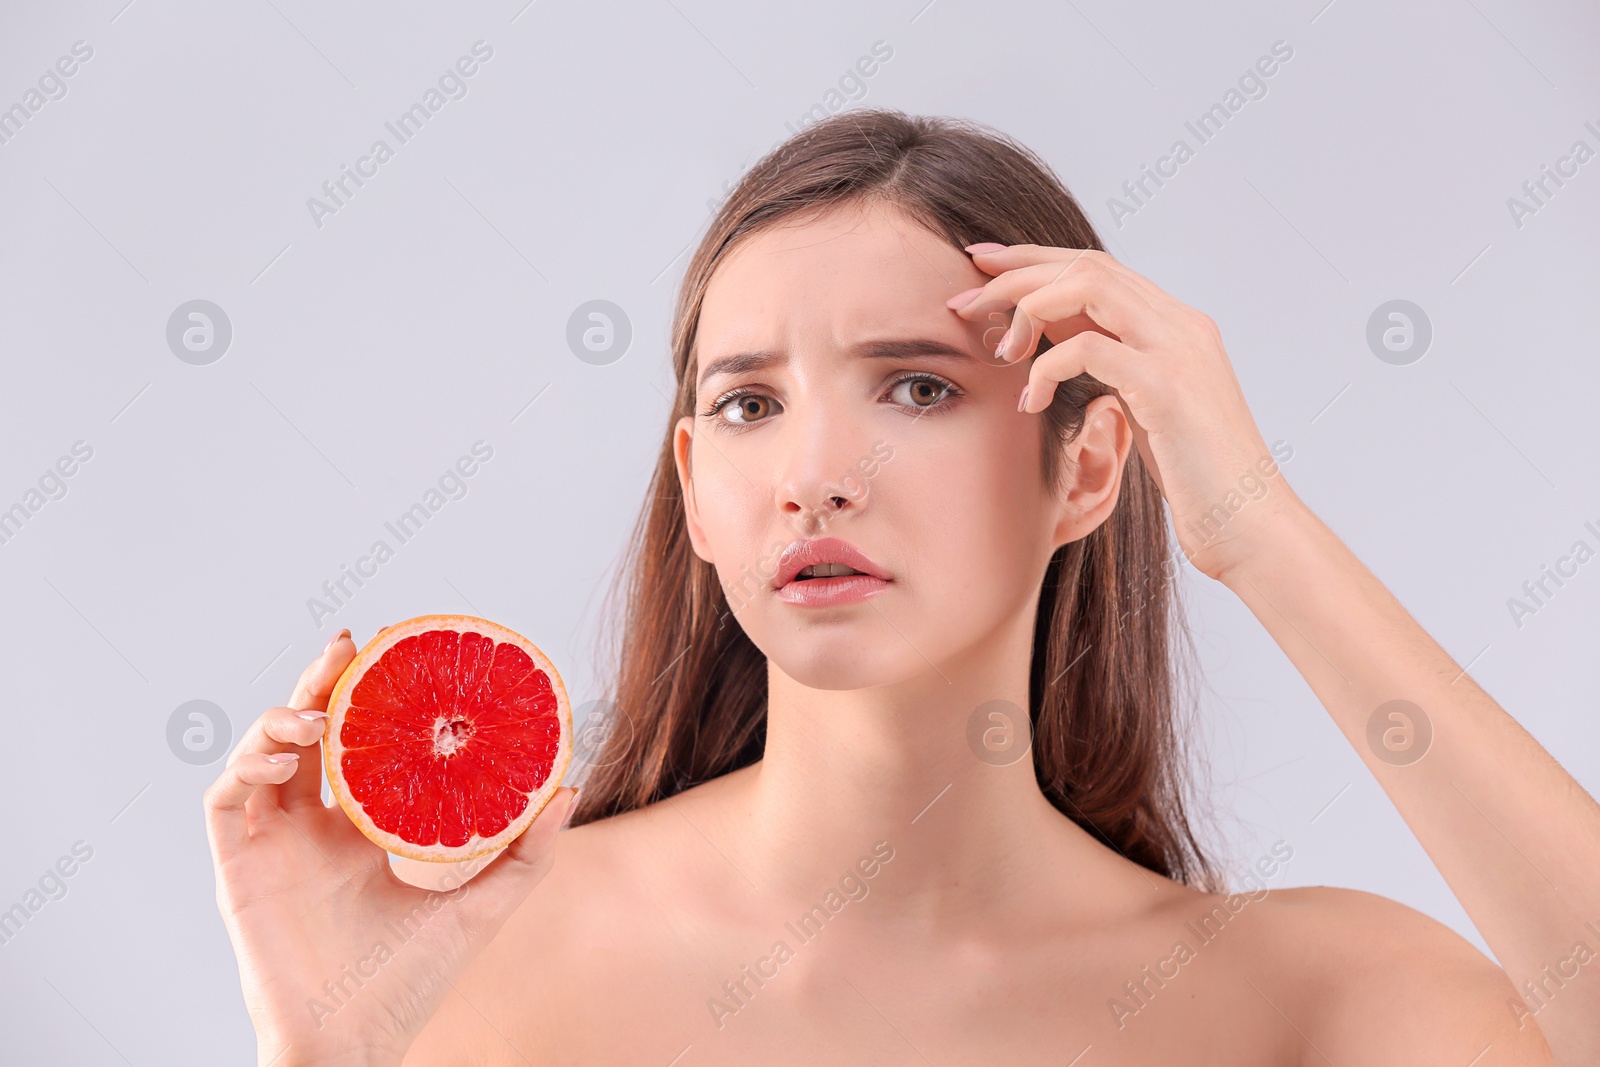 Photo of Teenage girl with acne problem holding grapefruit against grey background